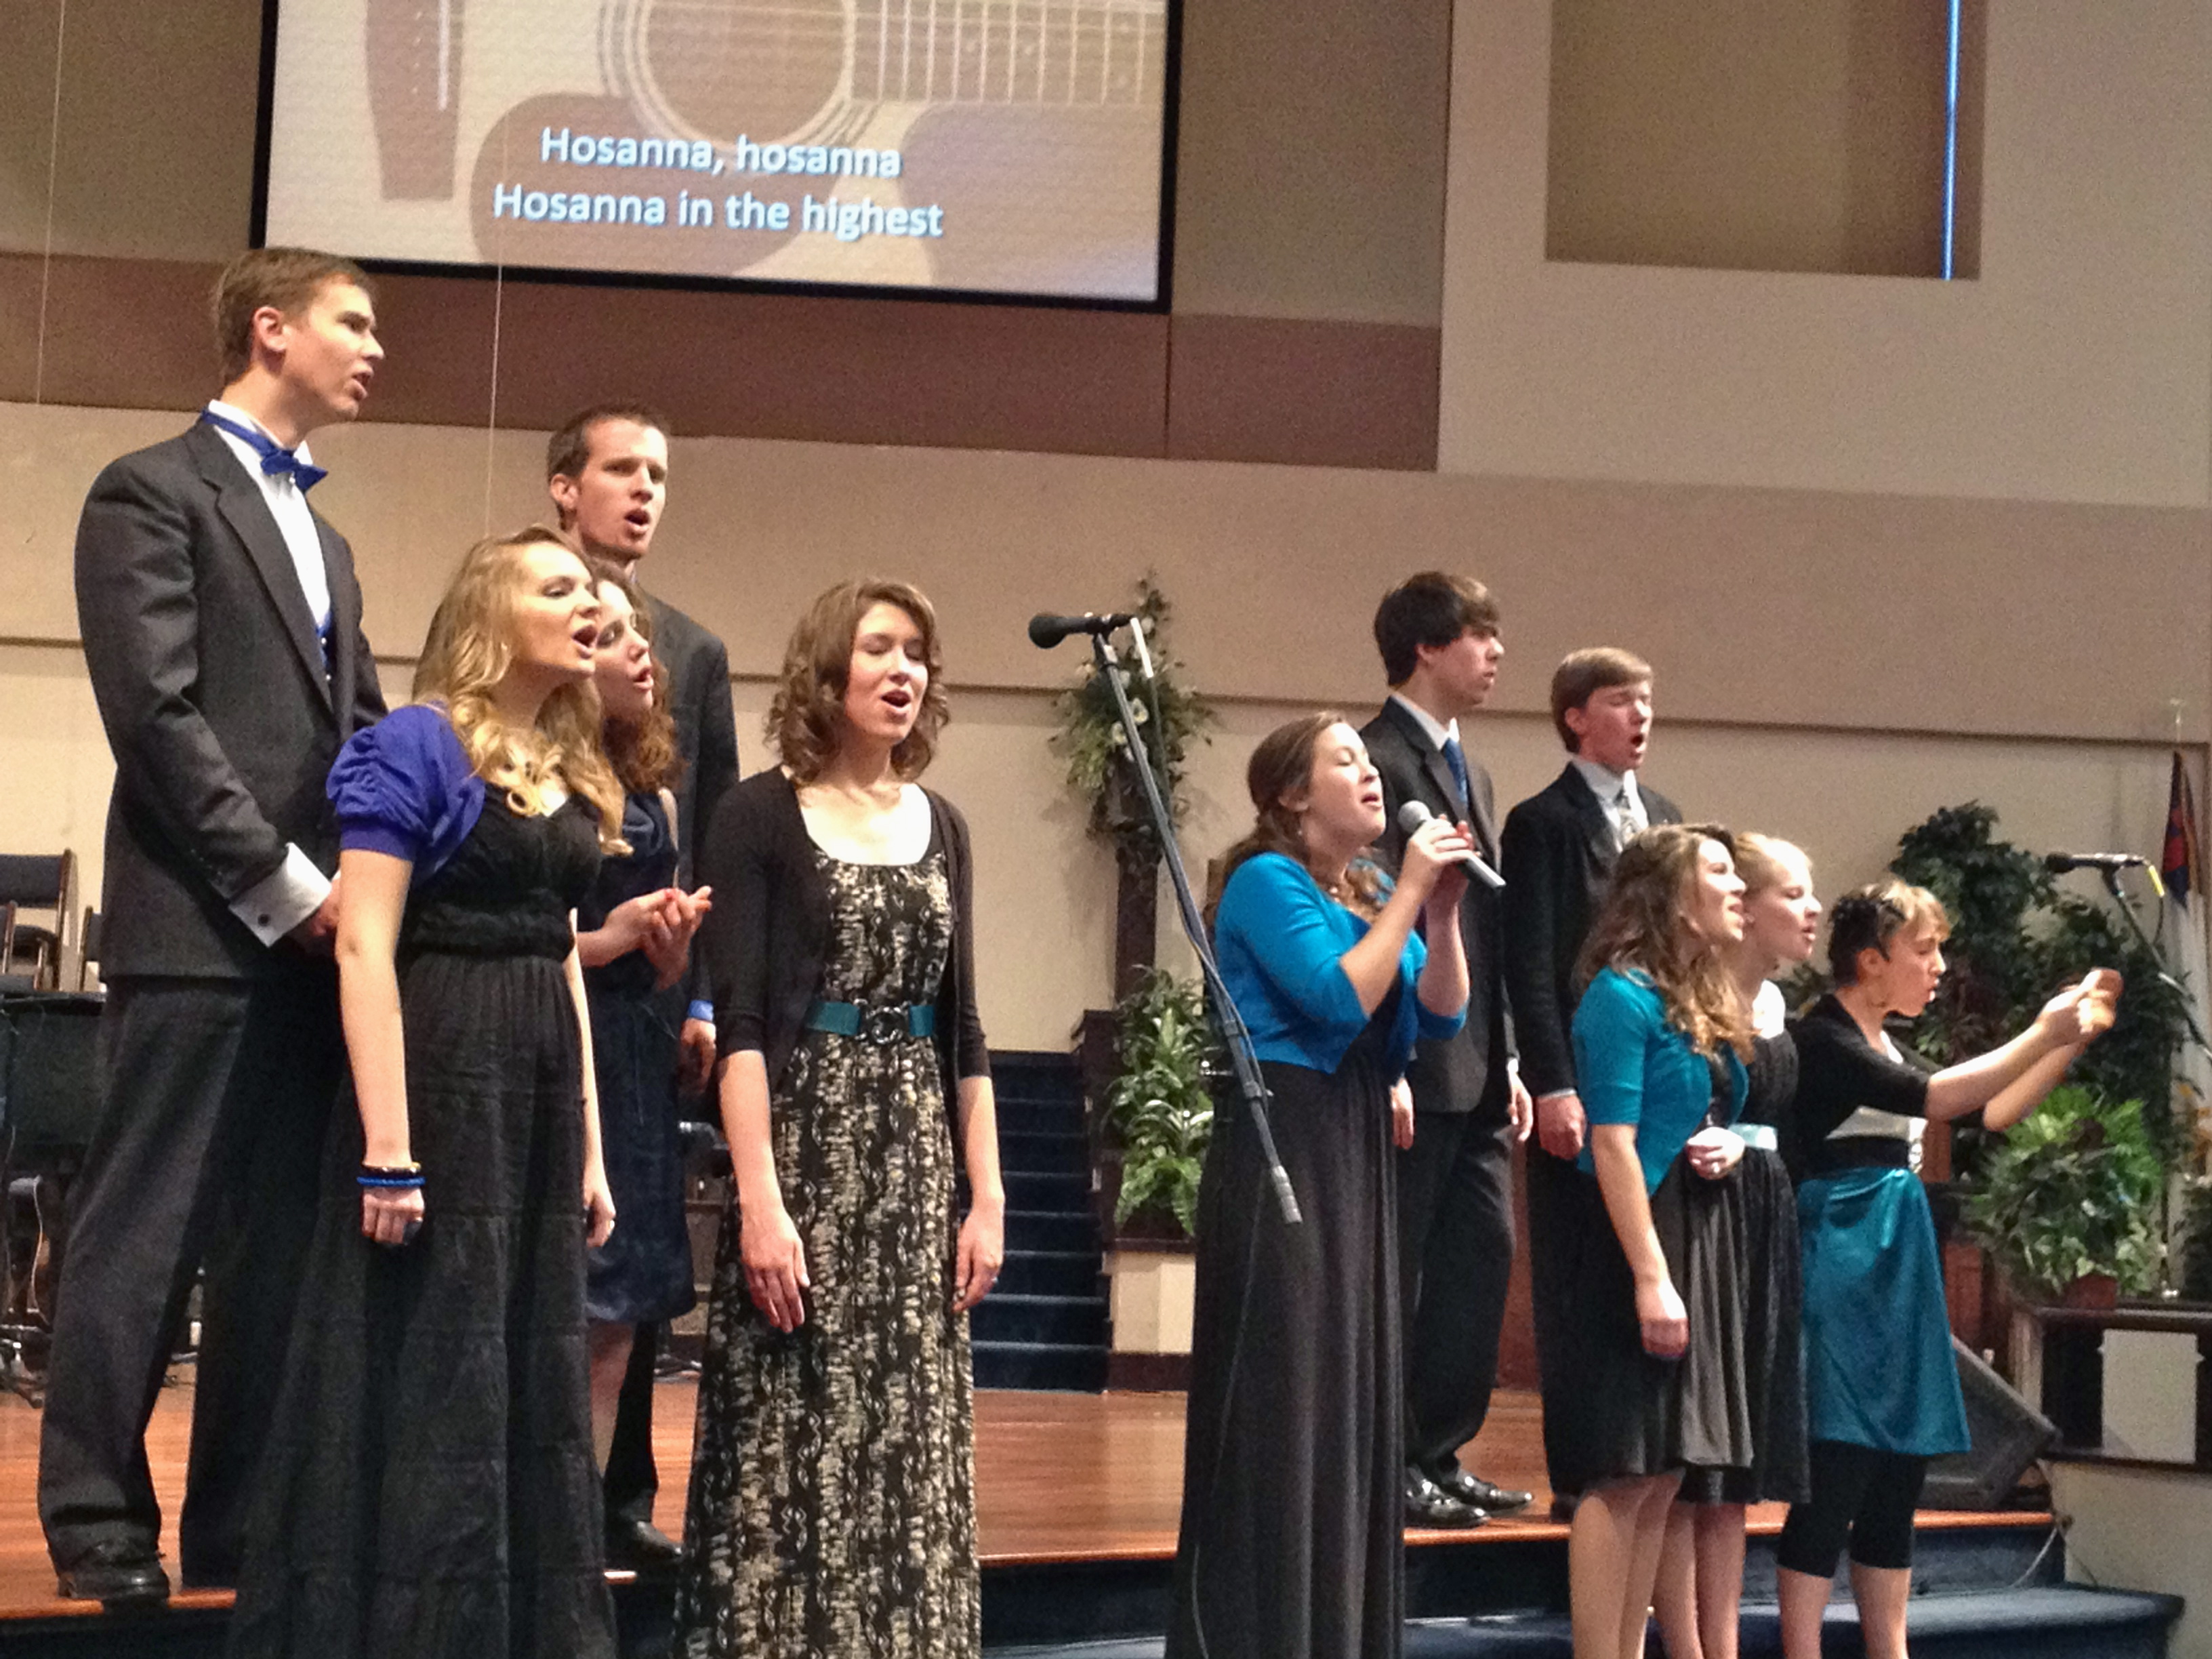 The Graduates leading us in Worship - Hosanna!